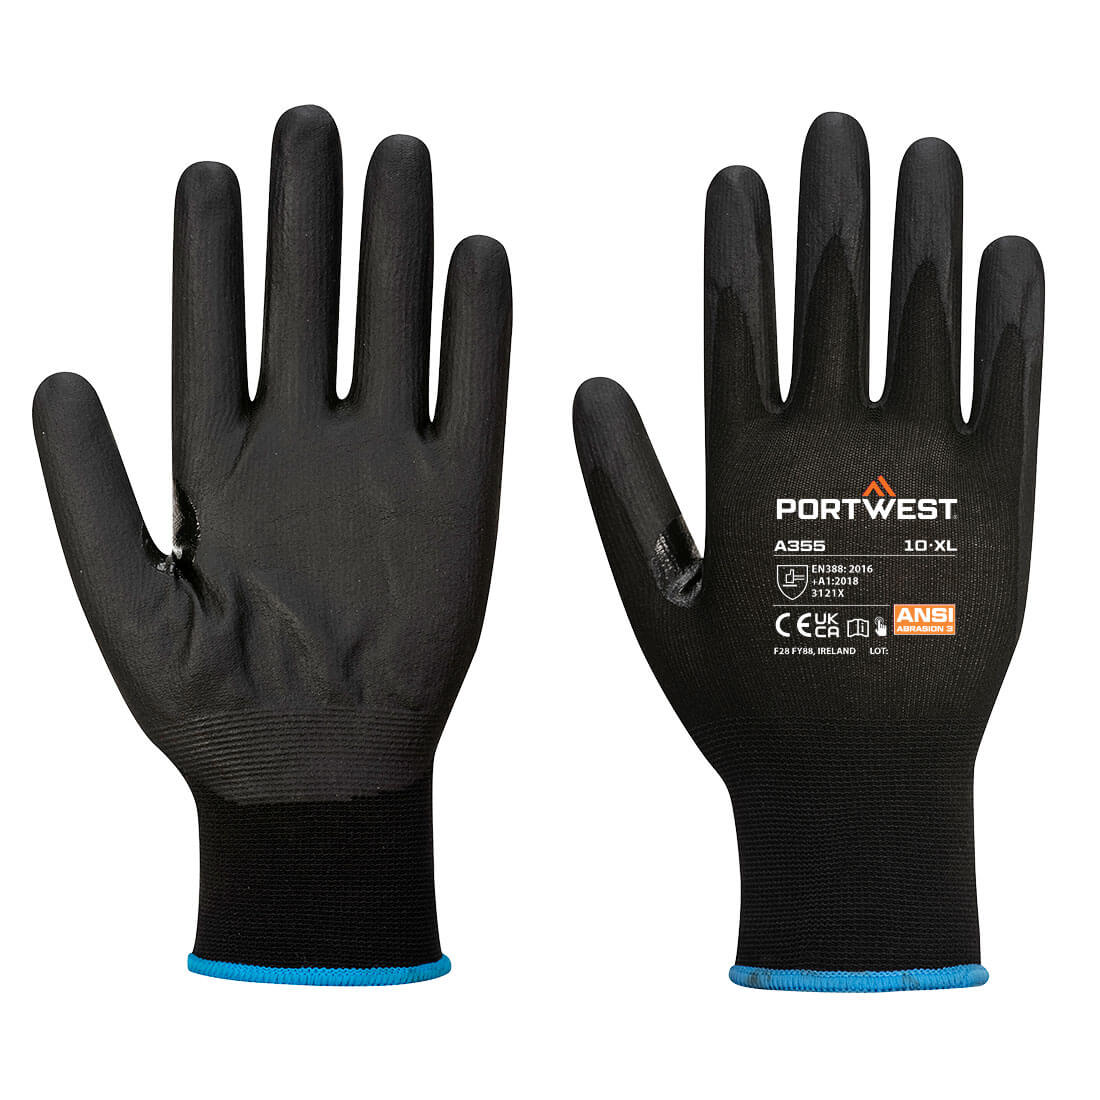 NPR15 Nitrile Foam Touchscreen Glove (Pk12)  (A355)